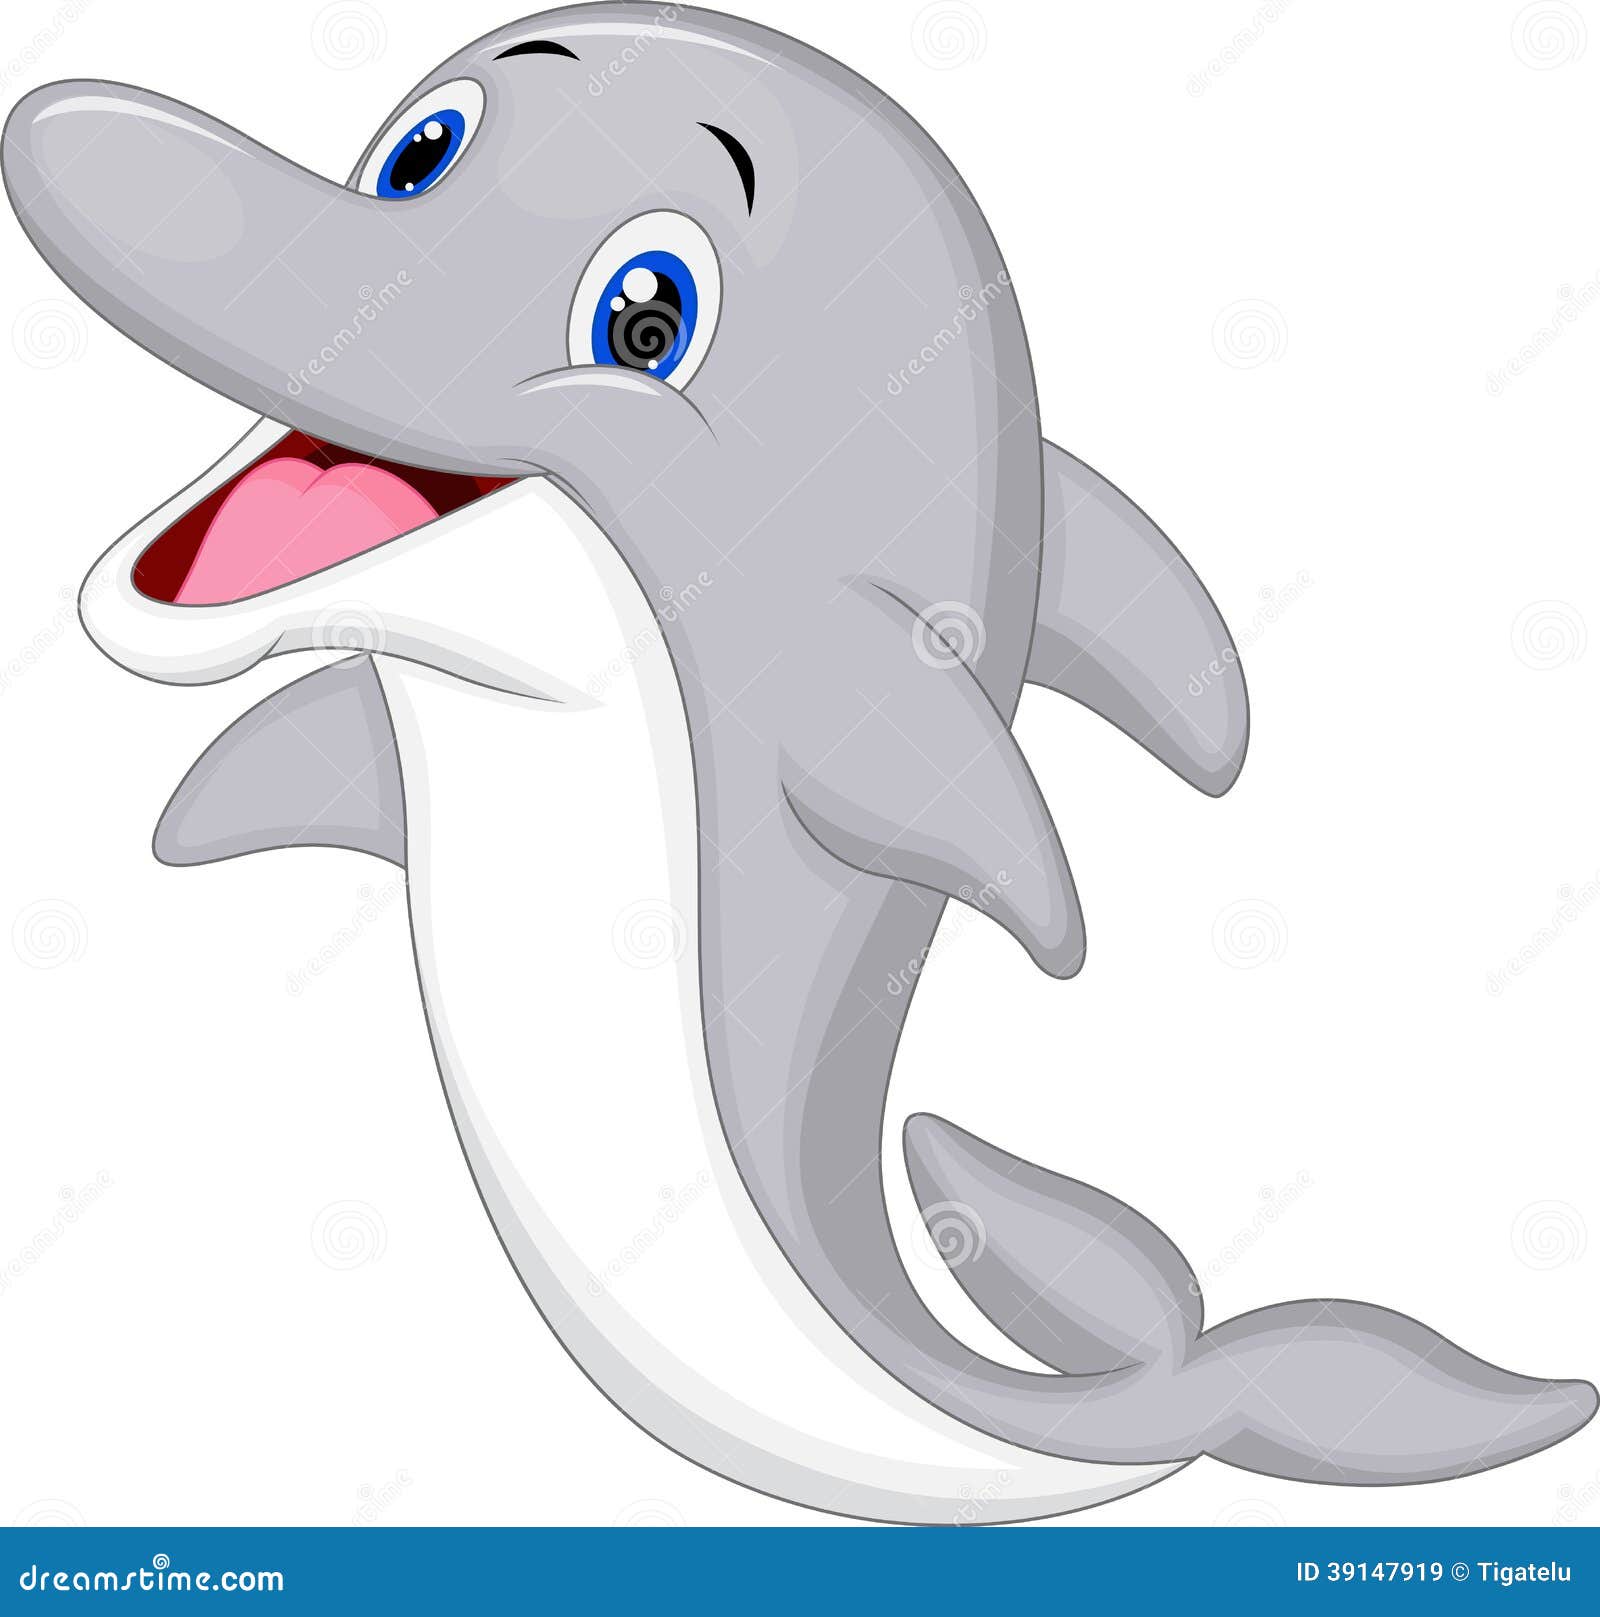 Cute dolphin cartoon stock vector. Illustration of funny - 39147919